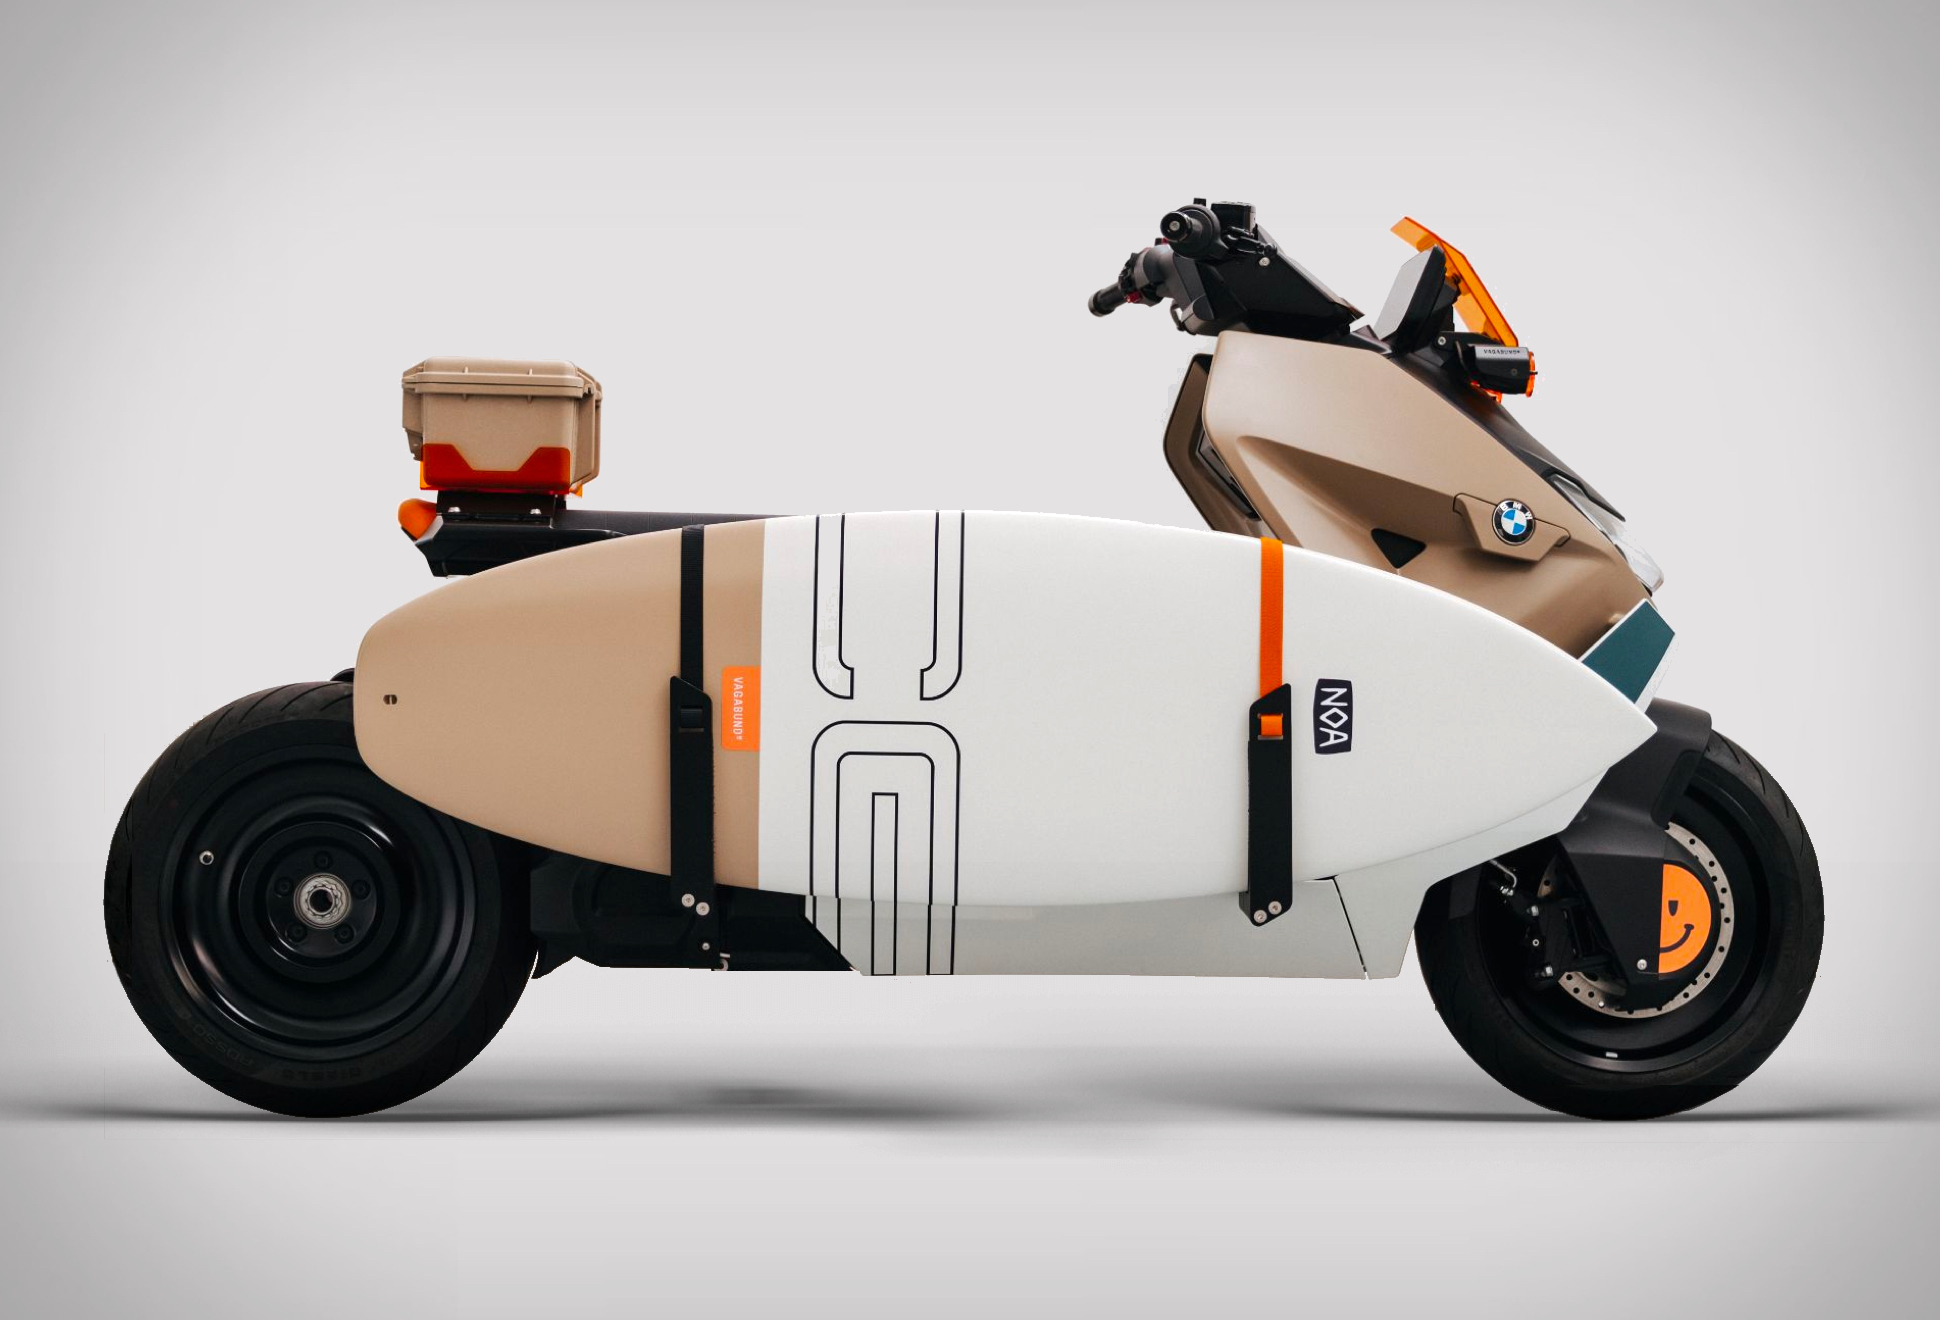 Moto Elétrica - Bmw Ce 04 Vagabund Moto Concept | Image